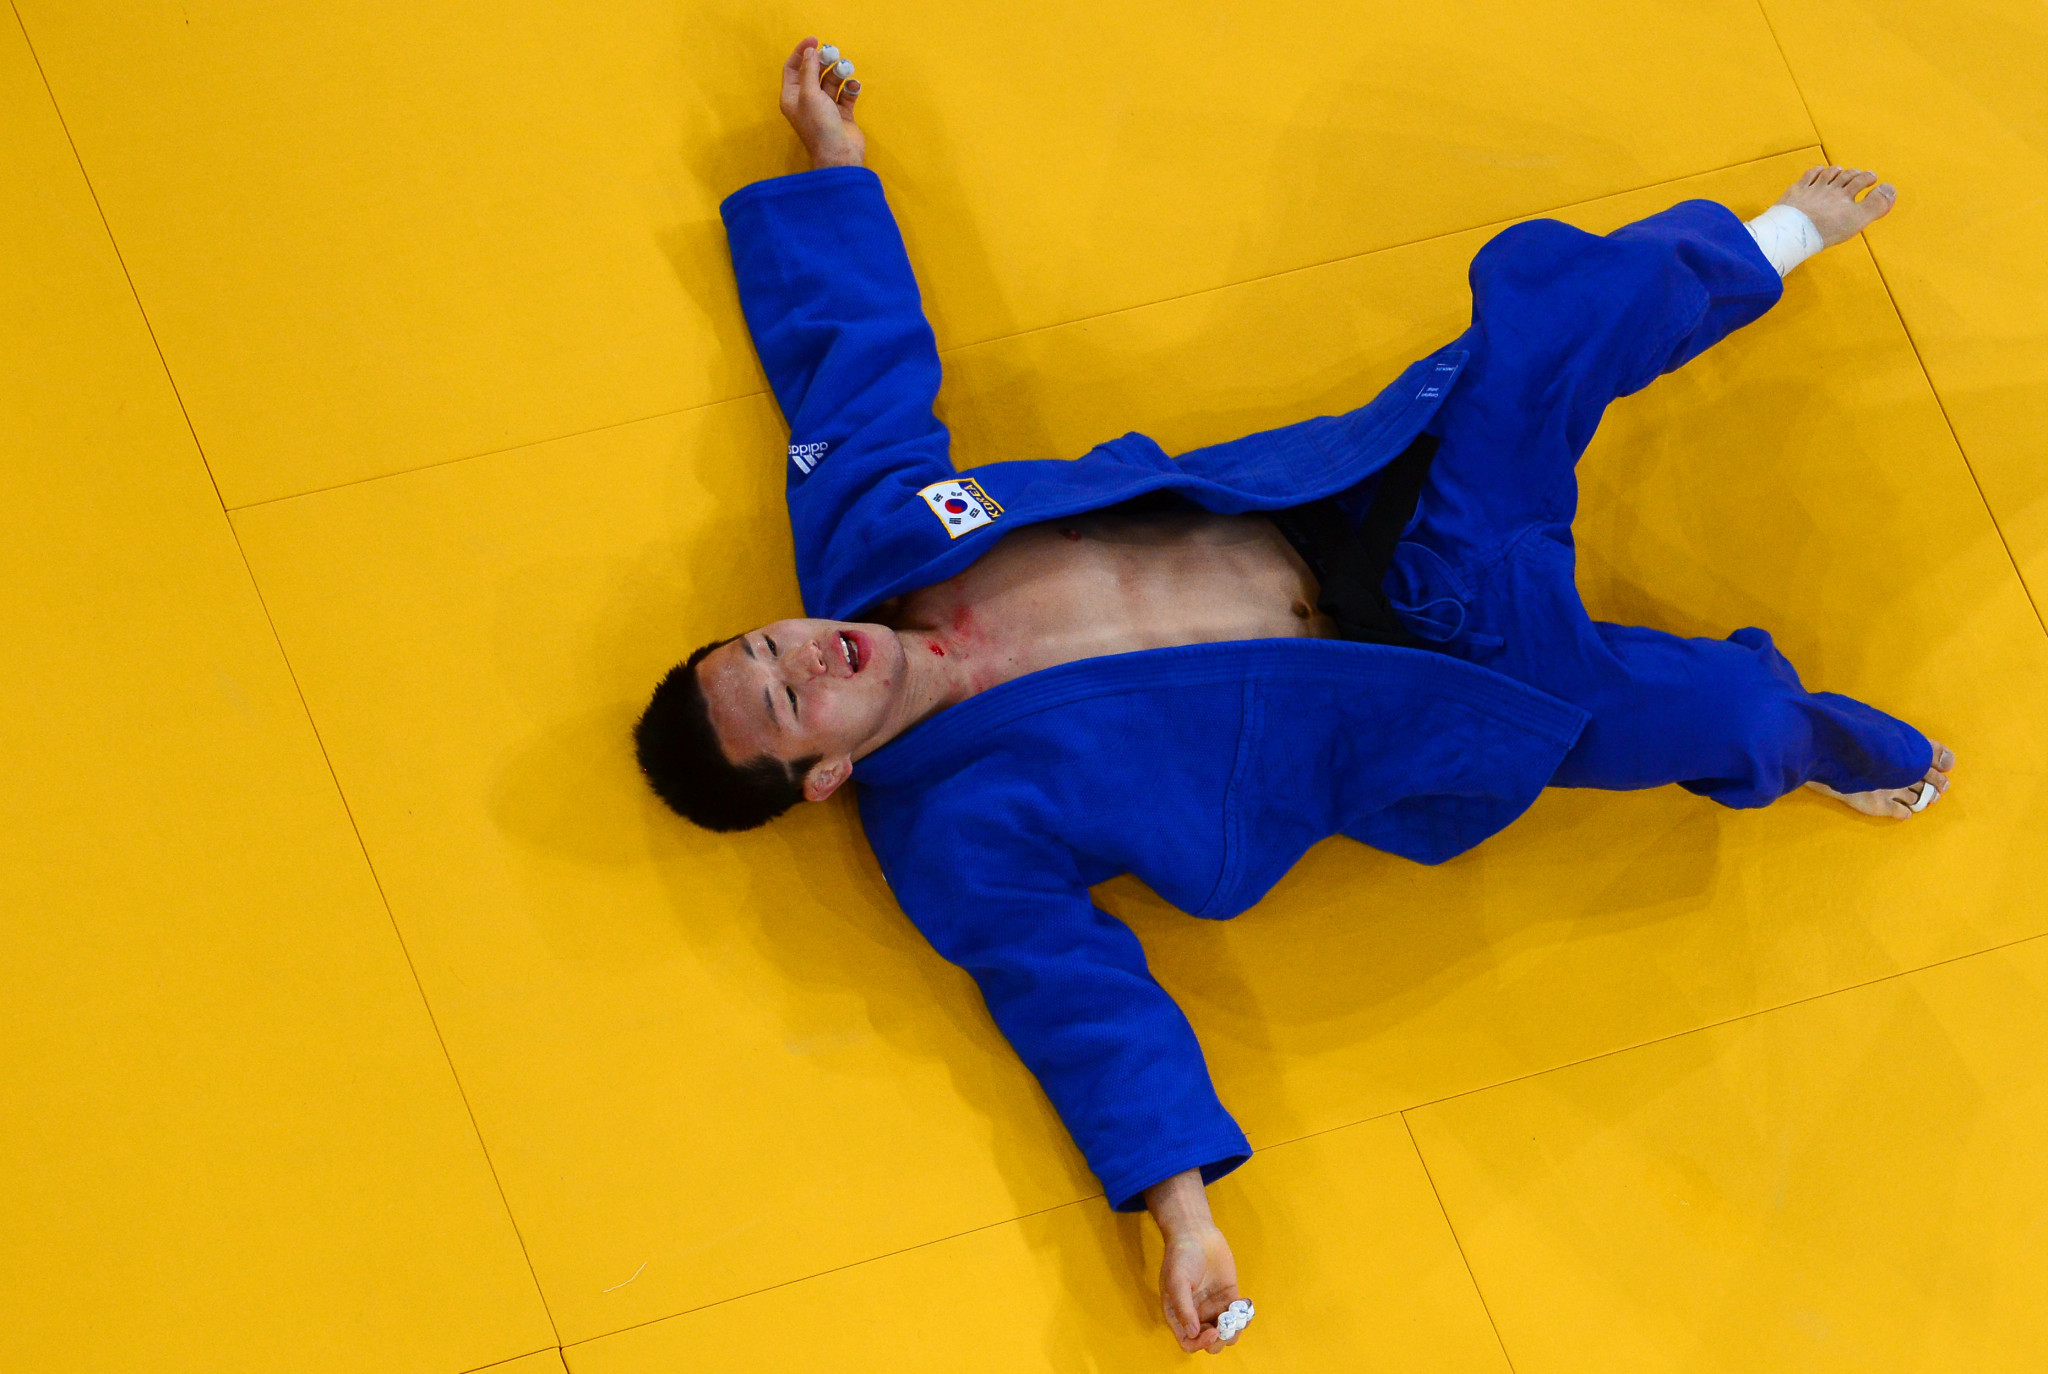 Wang Ki-chun has been given a life ban from judo ©Getty Images